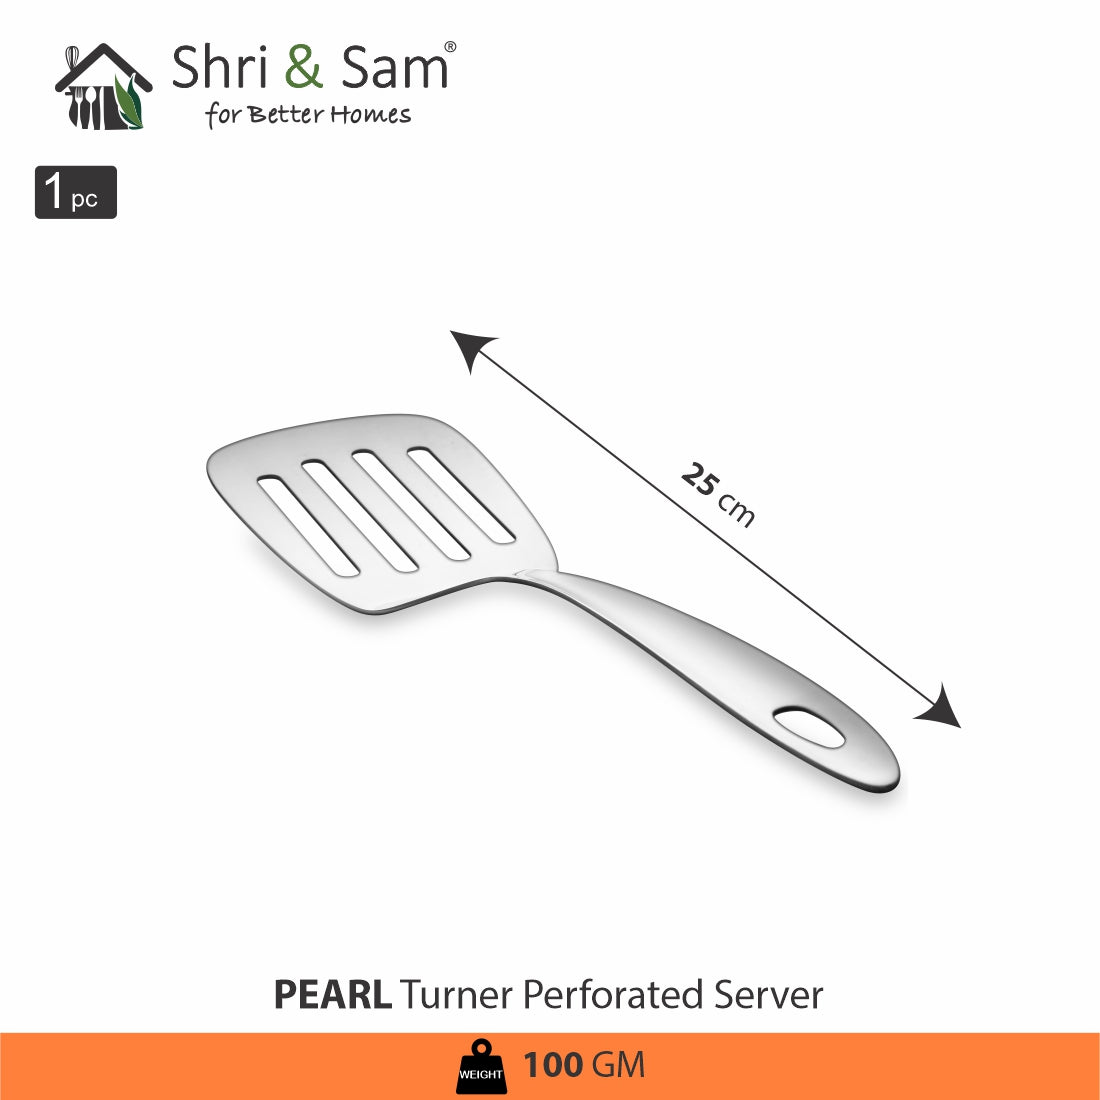 Stainless Steel Turner Perforated Server Pearl